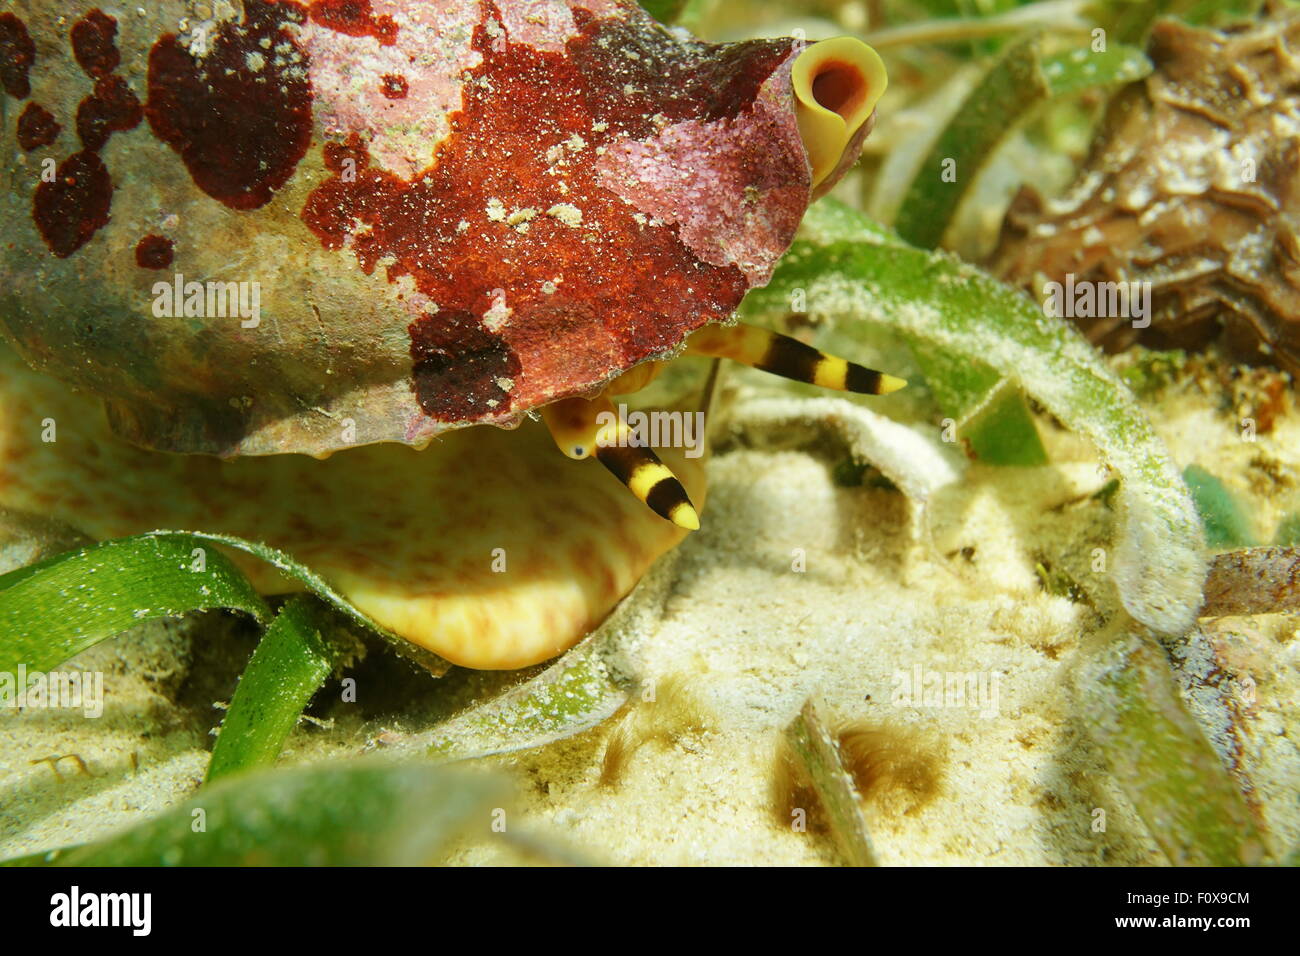 Marine life underwater, close up image of the head of an Atlantic triton trumpet mollusk, Charonia variegata, Caribbean sea Stock Photo